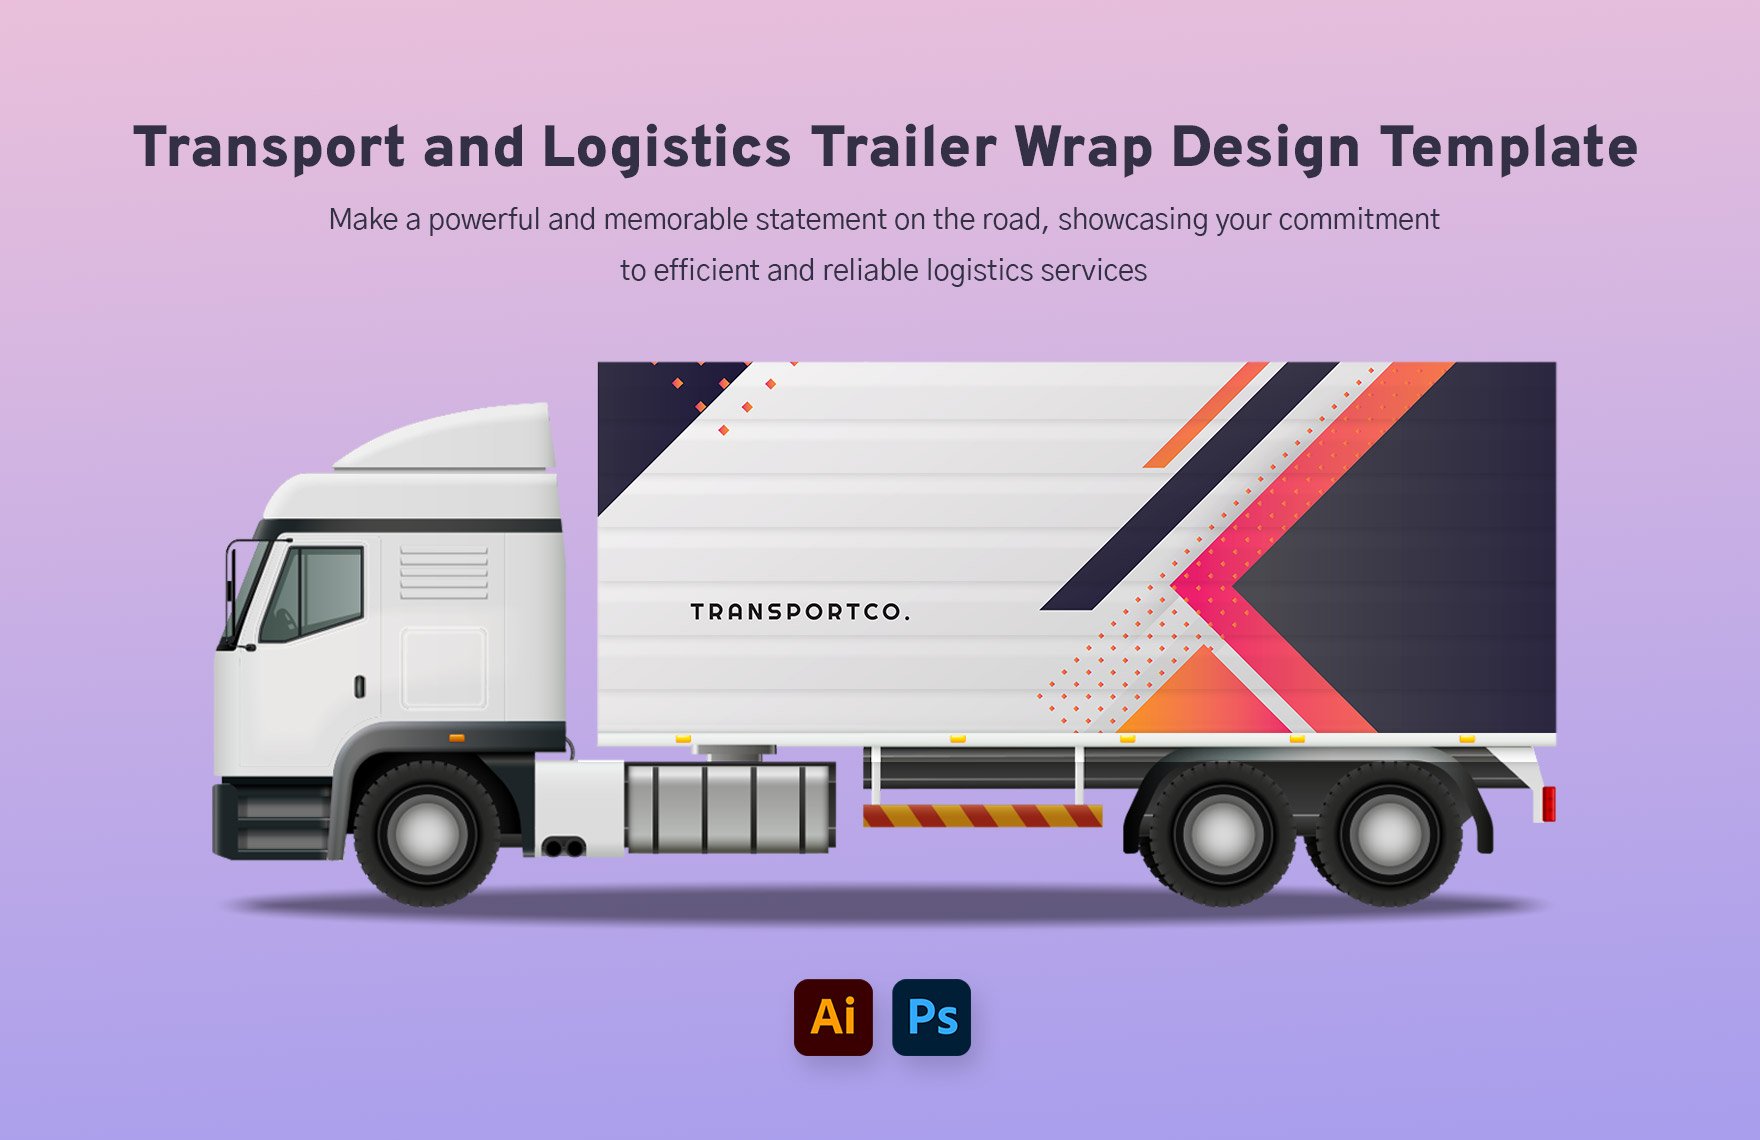 Transport and Logistics Trailer Wrap Design Template